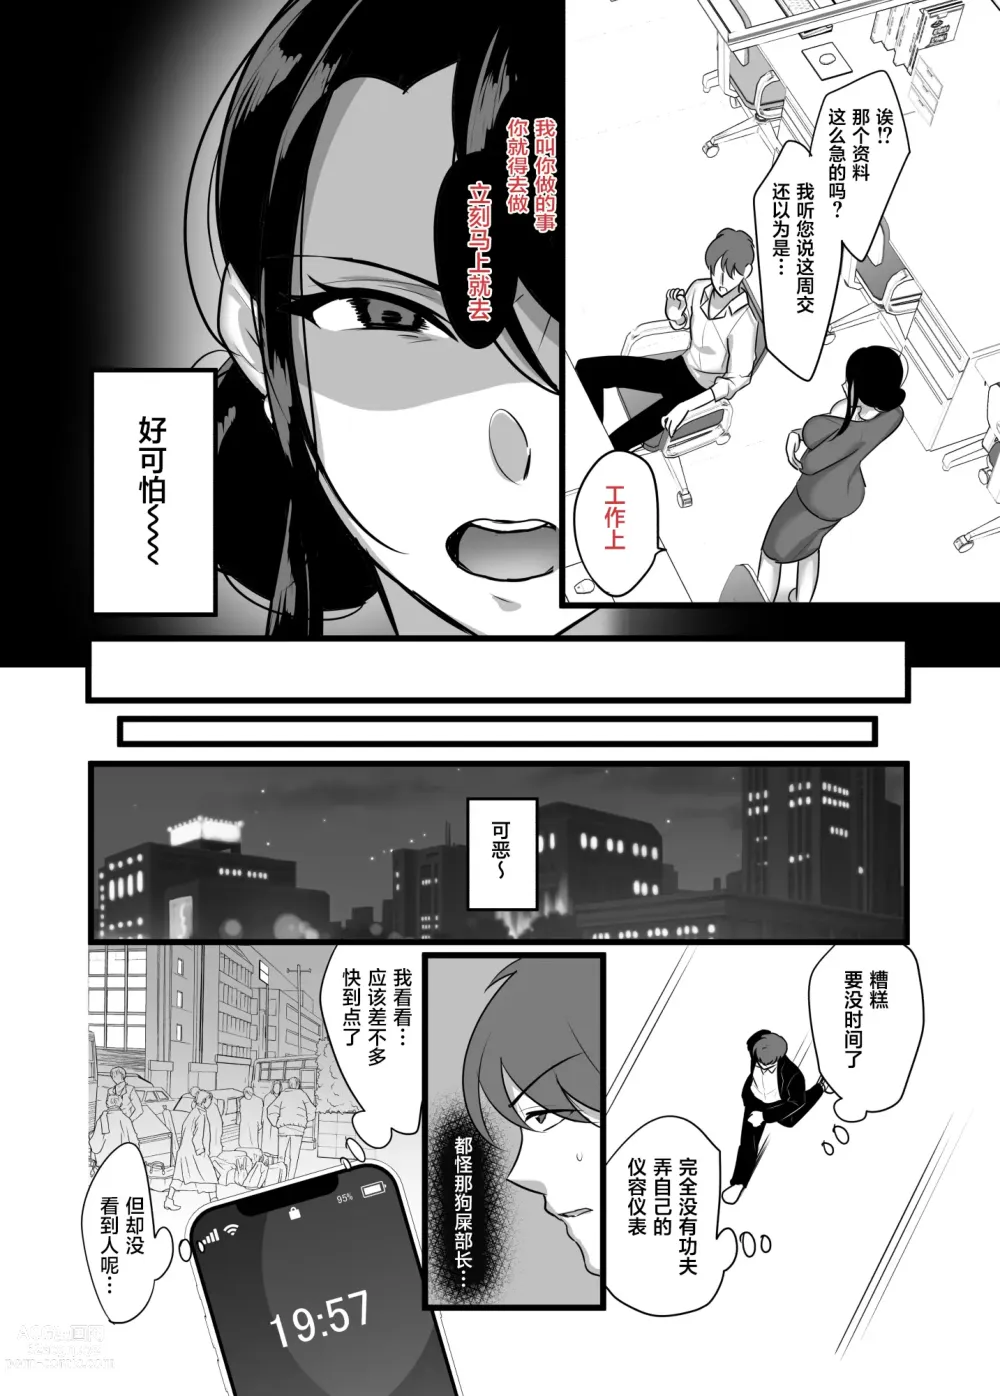 Page 6 of doujinshi 没想到那个魔鬼上司居然会成为我的炮友...